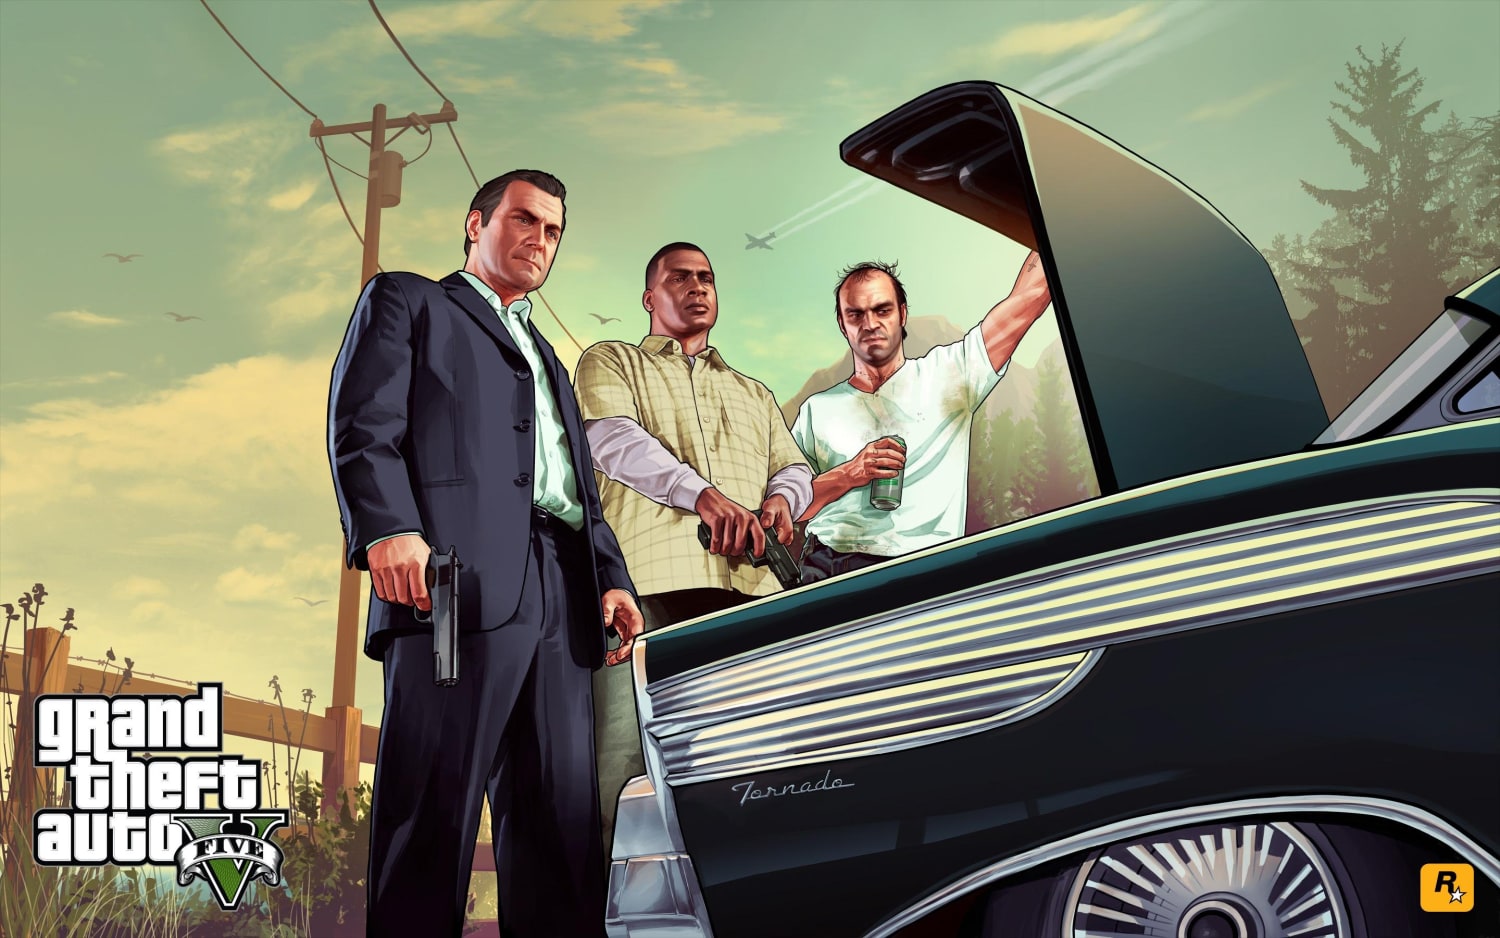  Grand Theft Auto V : Video Games